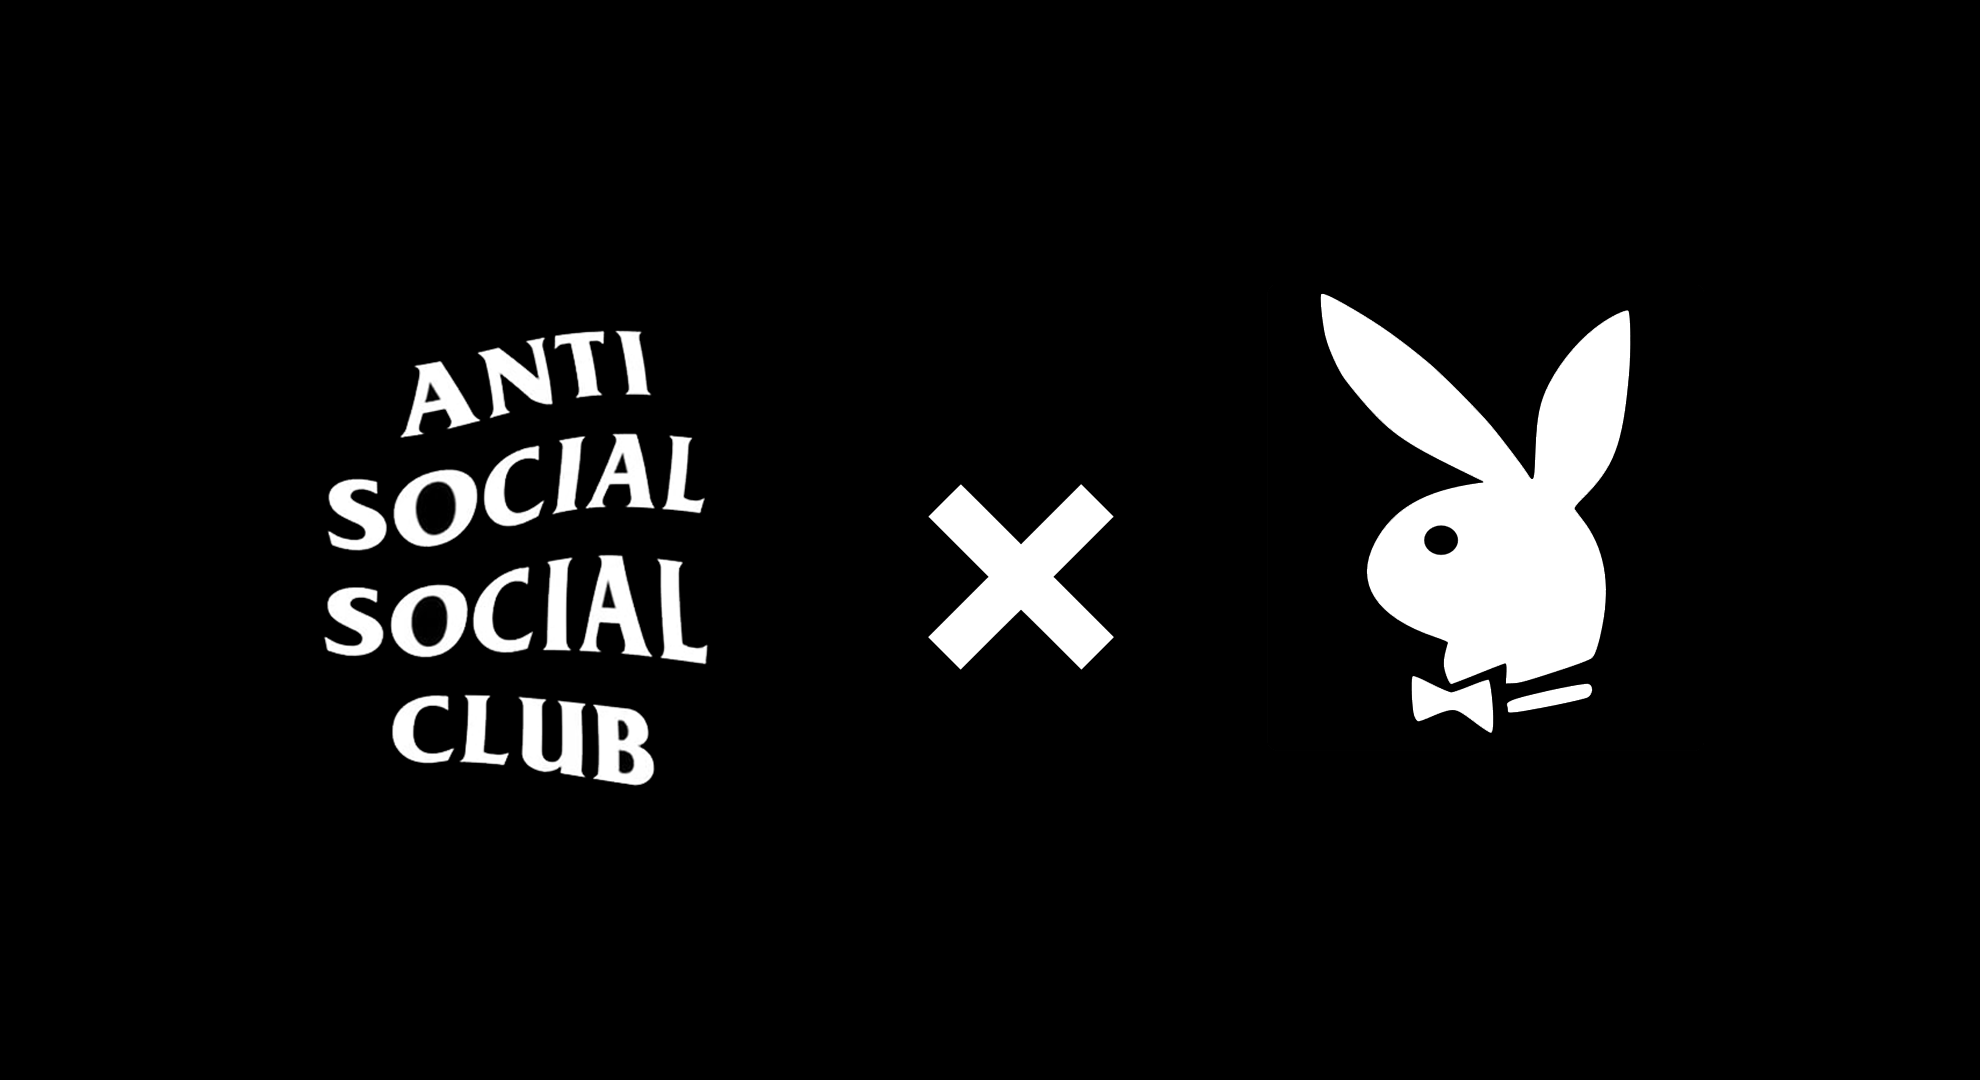 Anti Social Social Club Wallpapers - Top Free Anti Social Social Club